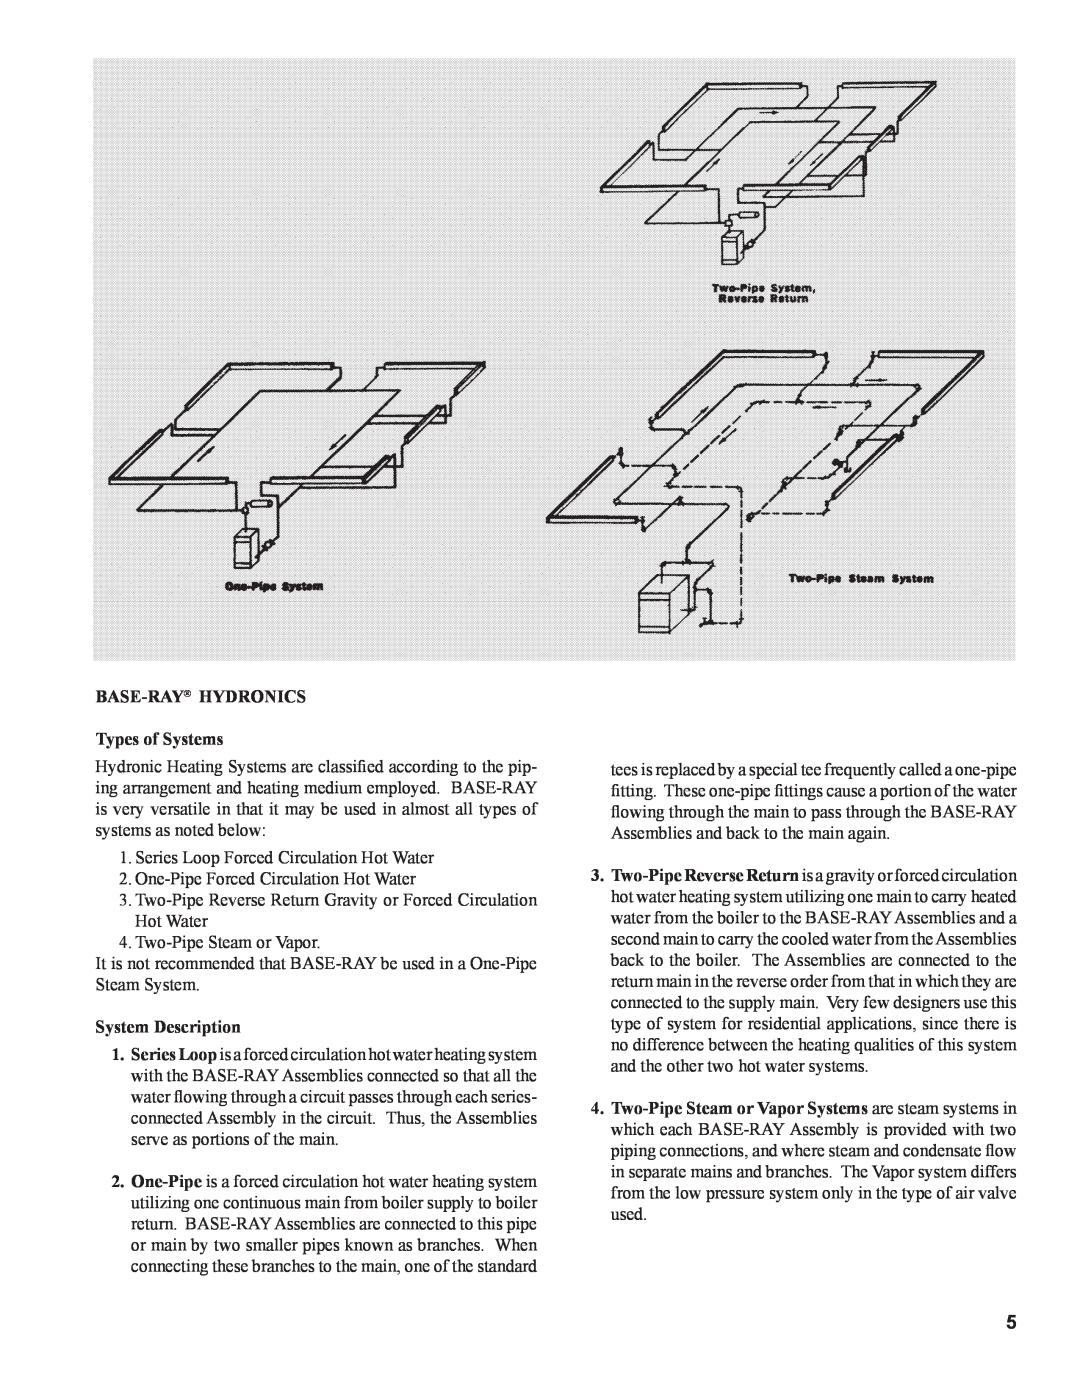 Burnham 81441001R8-3/06 installation instructions BASE-RAY HYDRONICS Types of Systems, System Description 